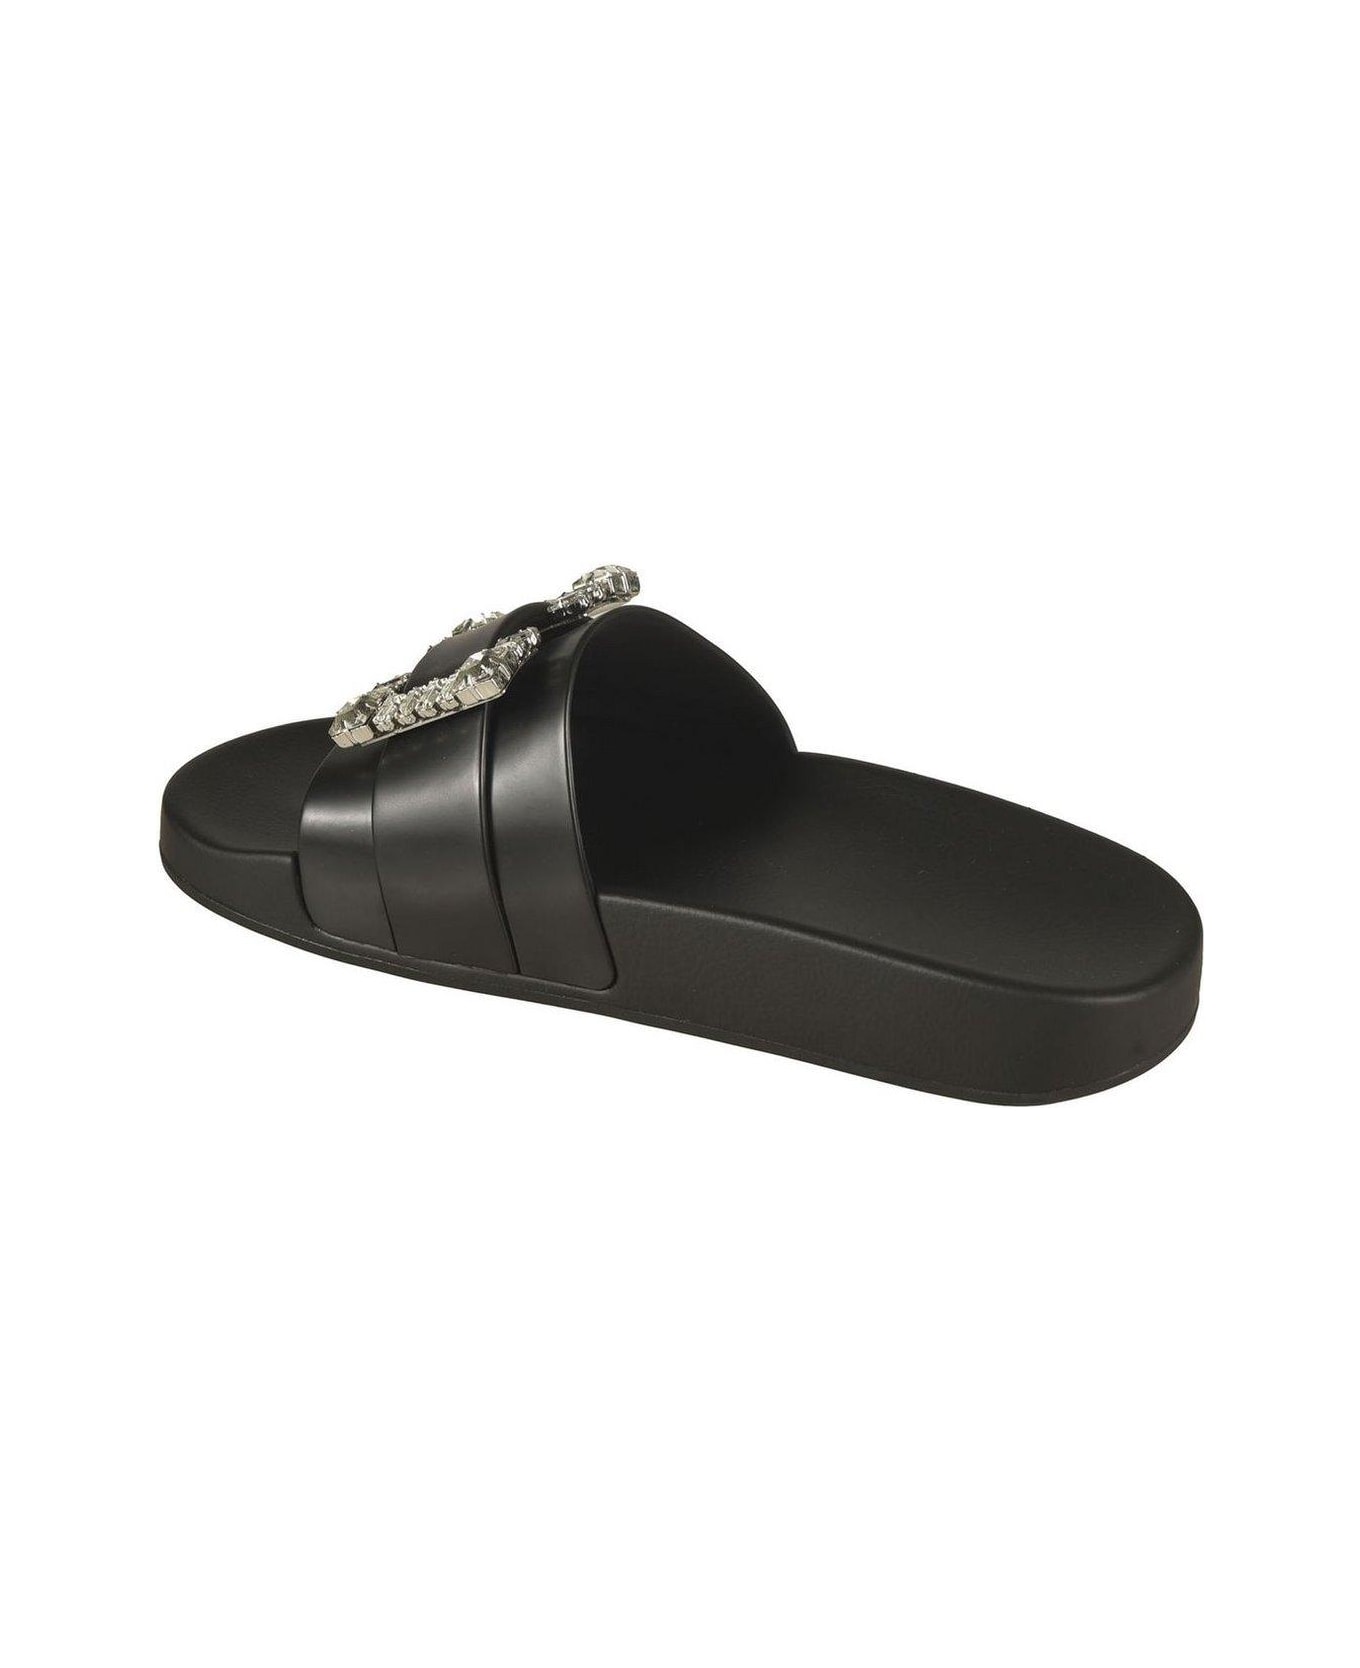 Sergio Rossi Sr Jelly Embellished Slip-on Sandals - Black サンダル